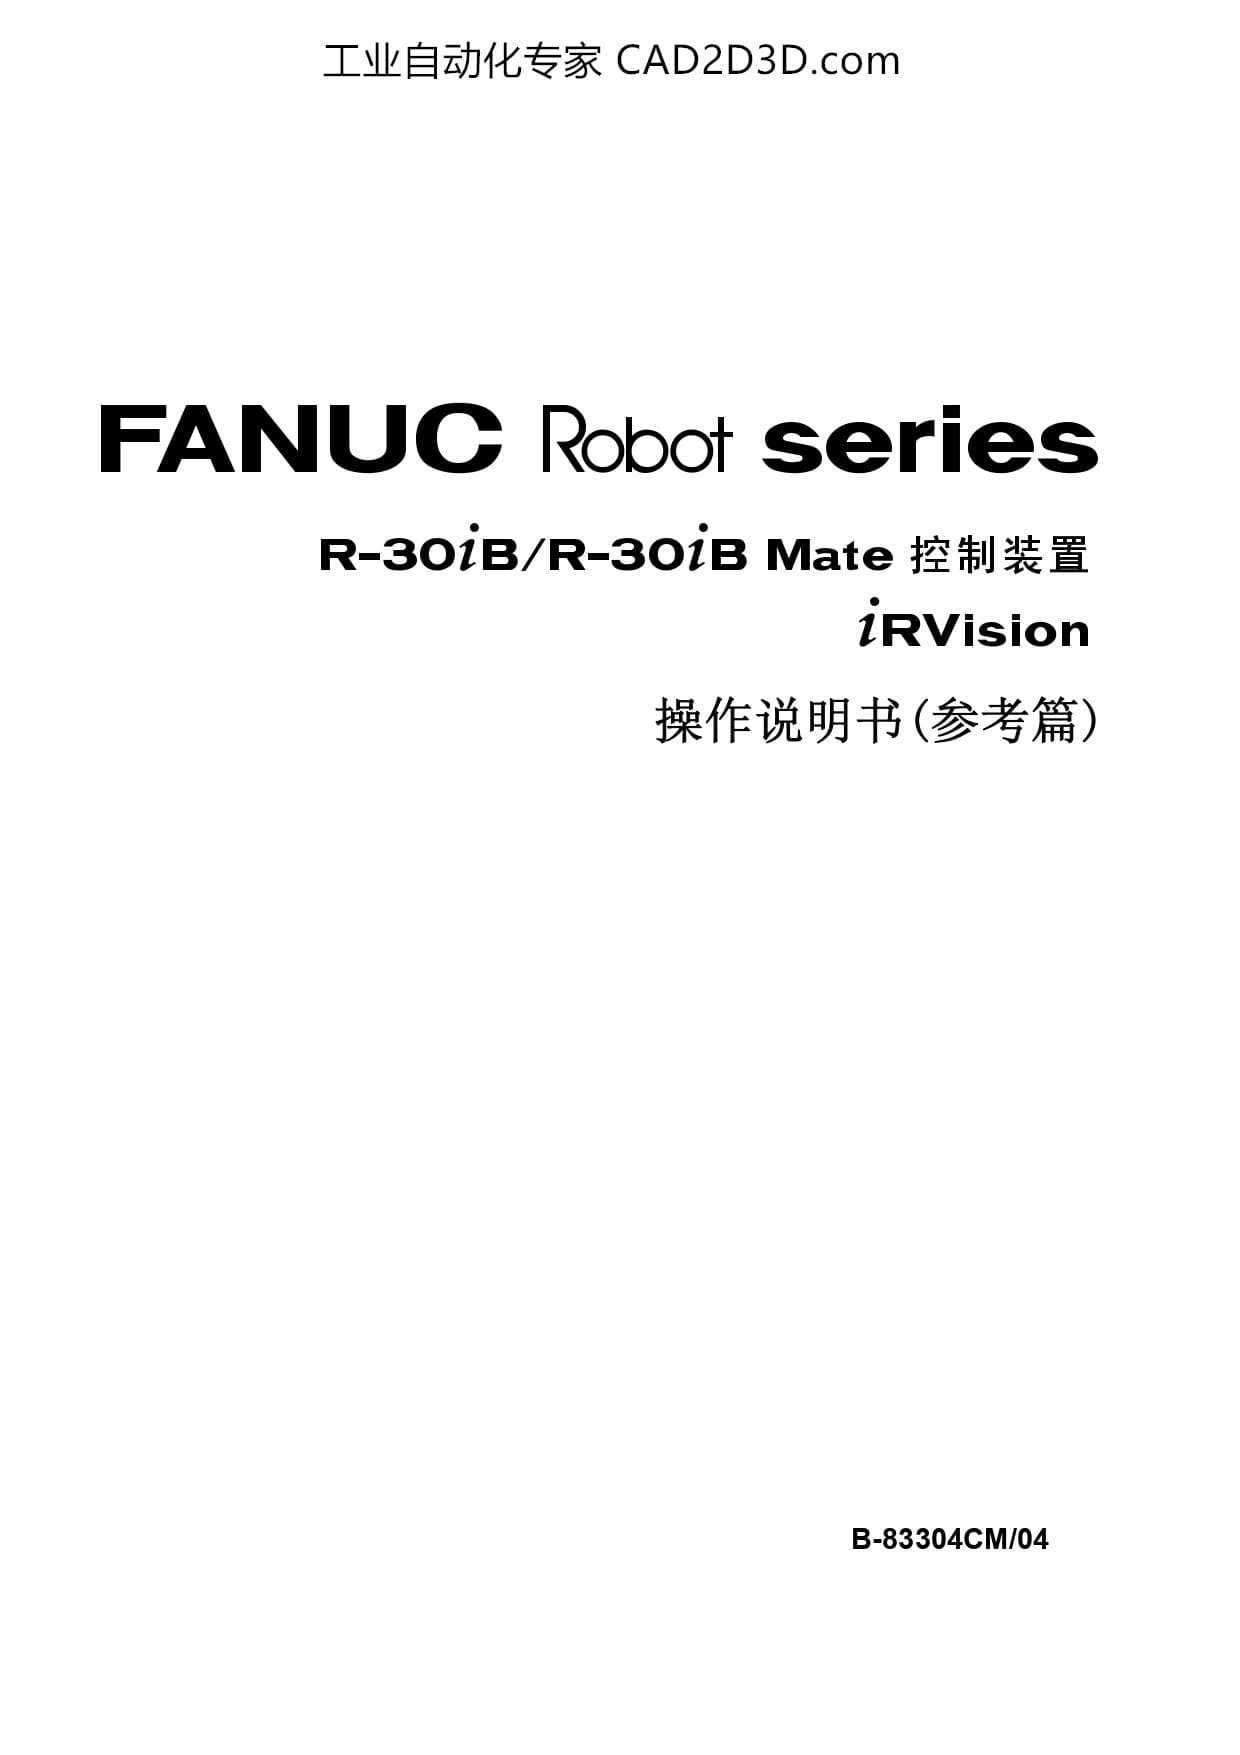 FANUC Robot series R-30iB/R-30iB Mate 控制装置 iRvision 操作说明书